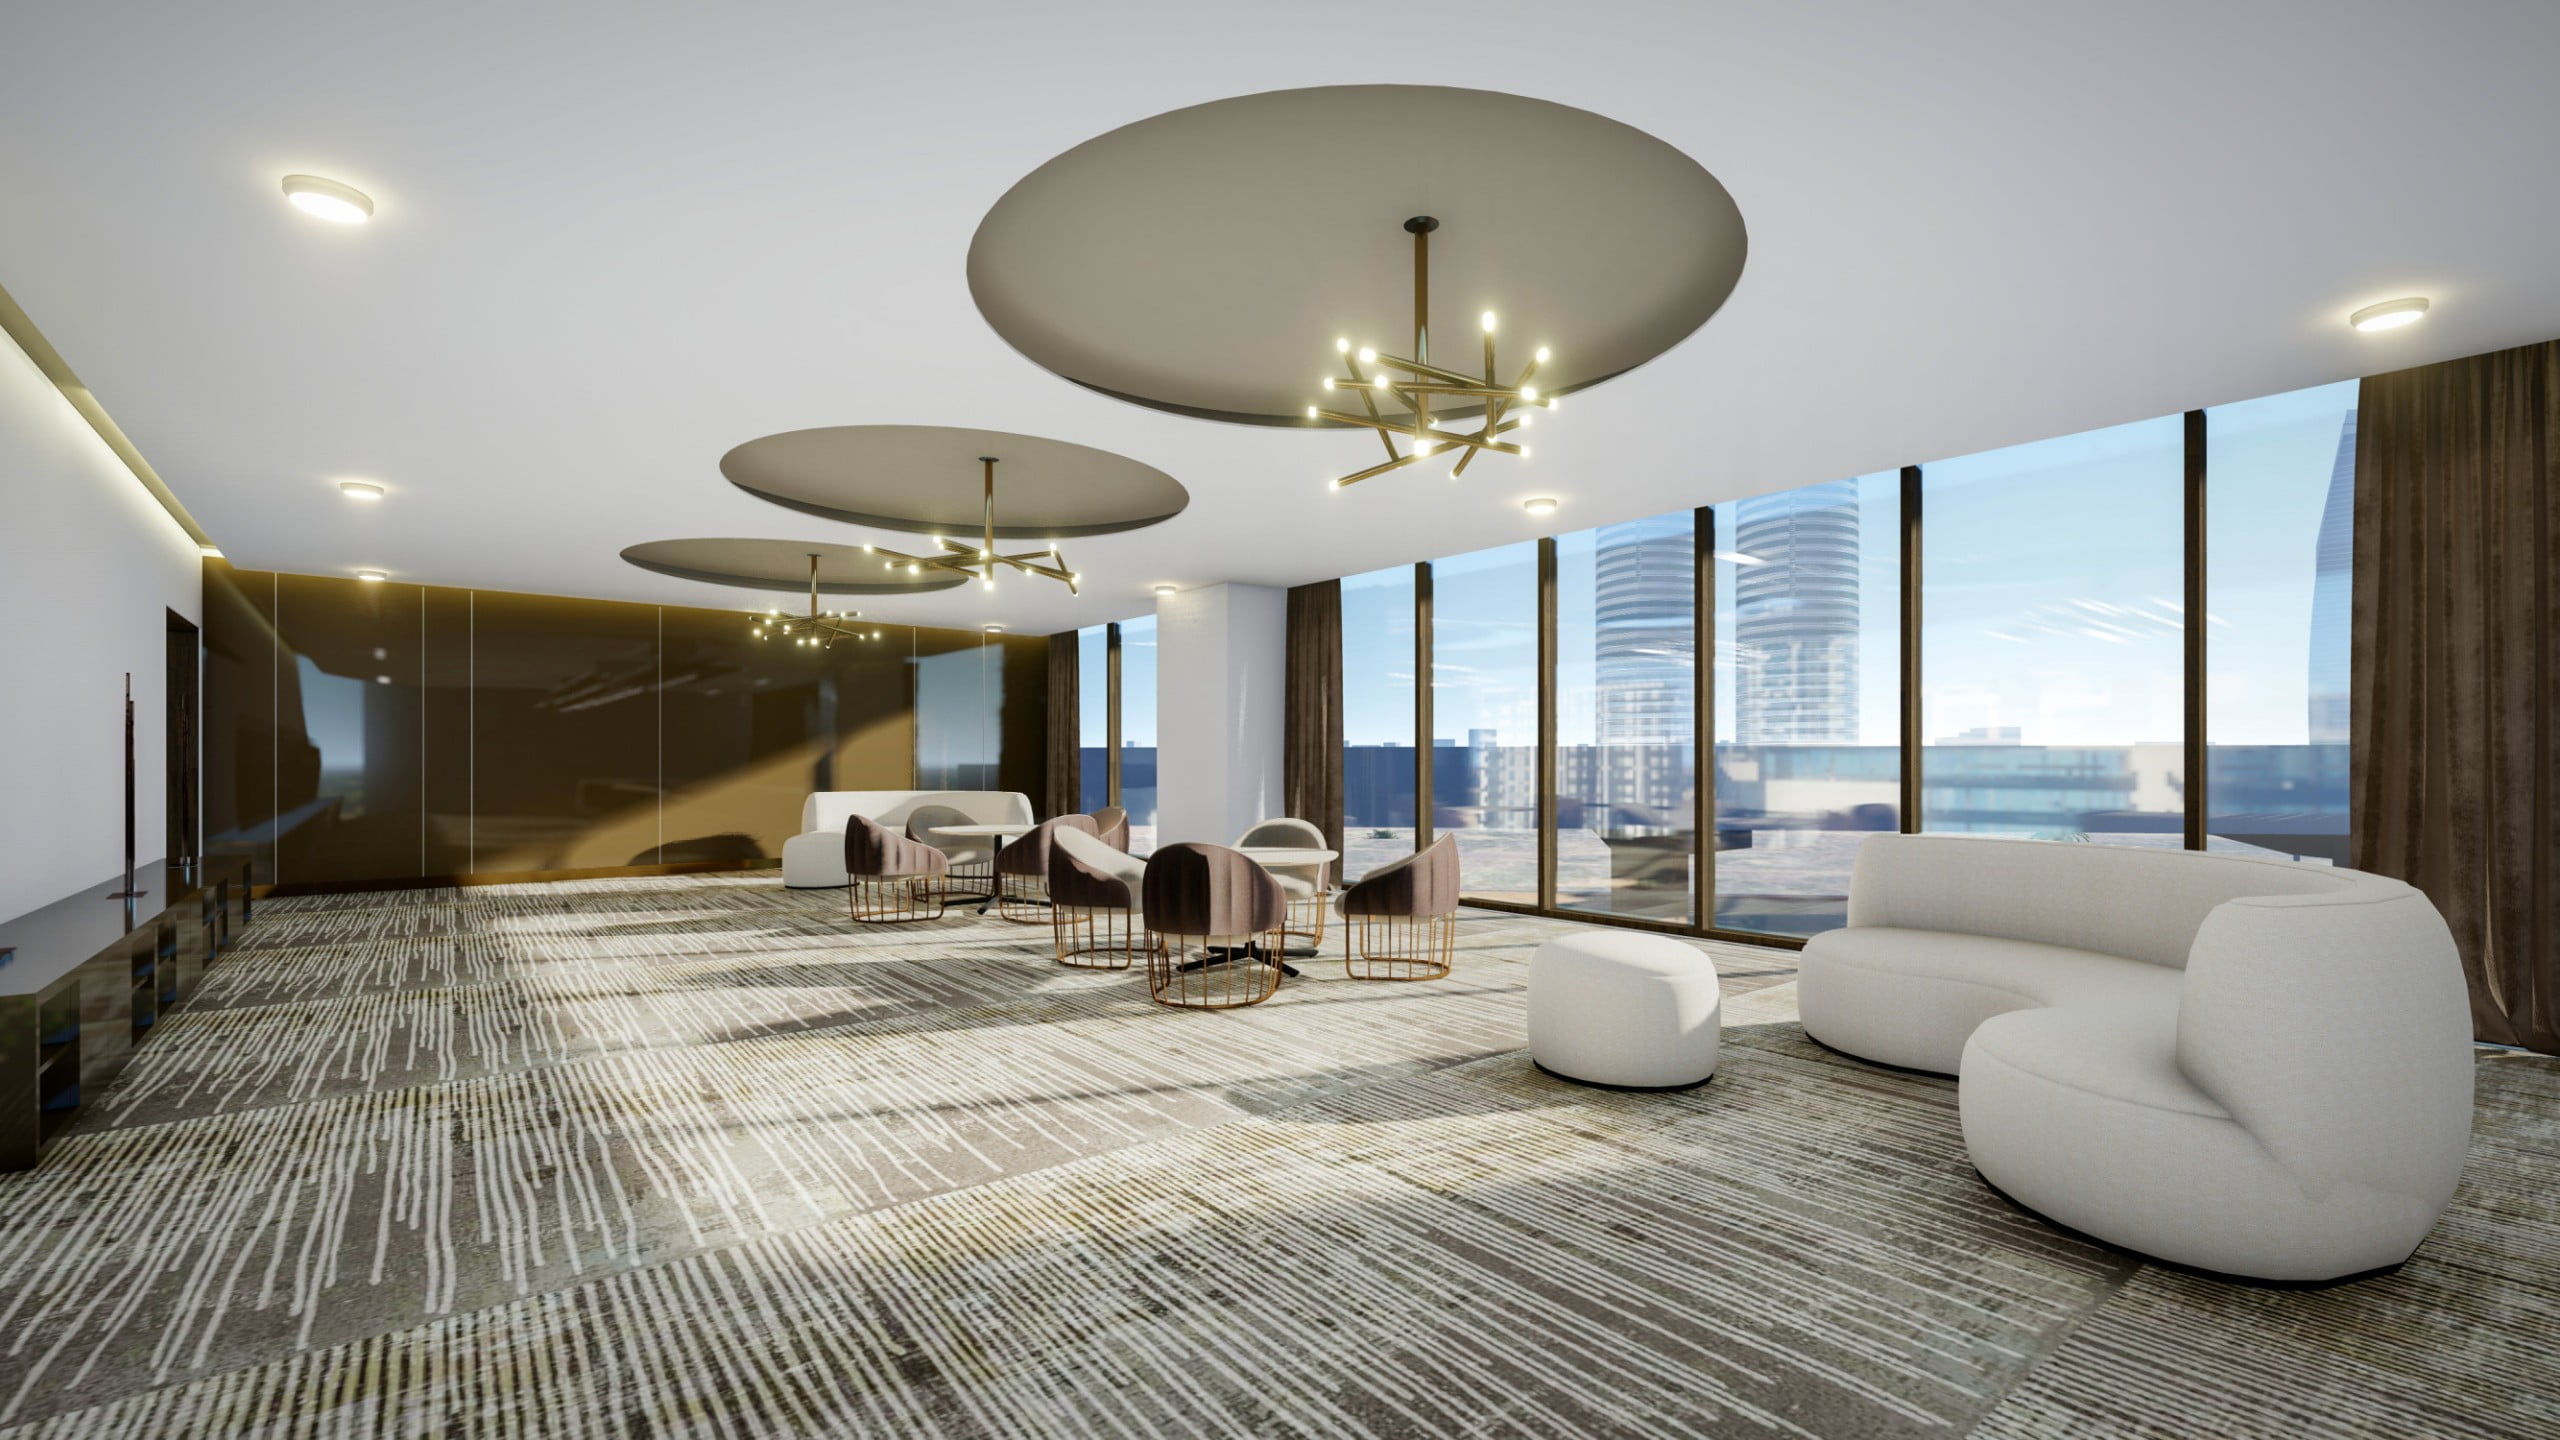 MULTI PURPOSE ROOM scaled - Immobilier Dubai